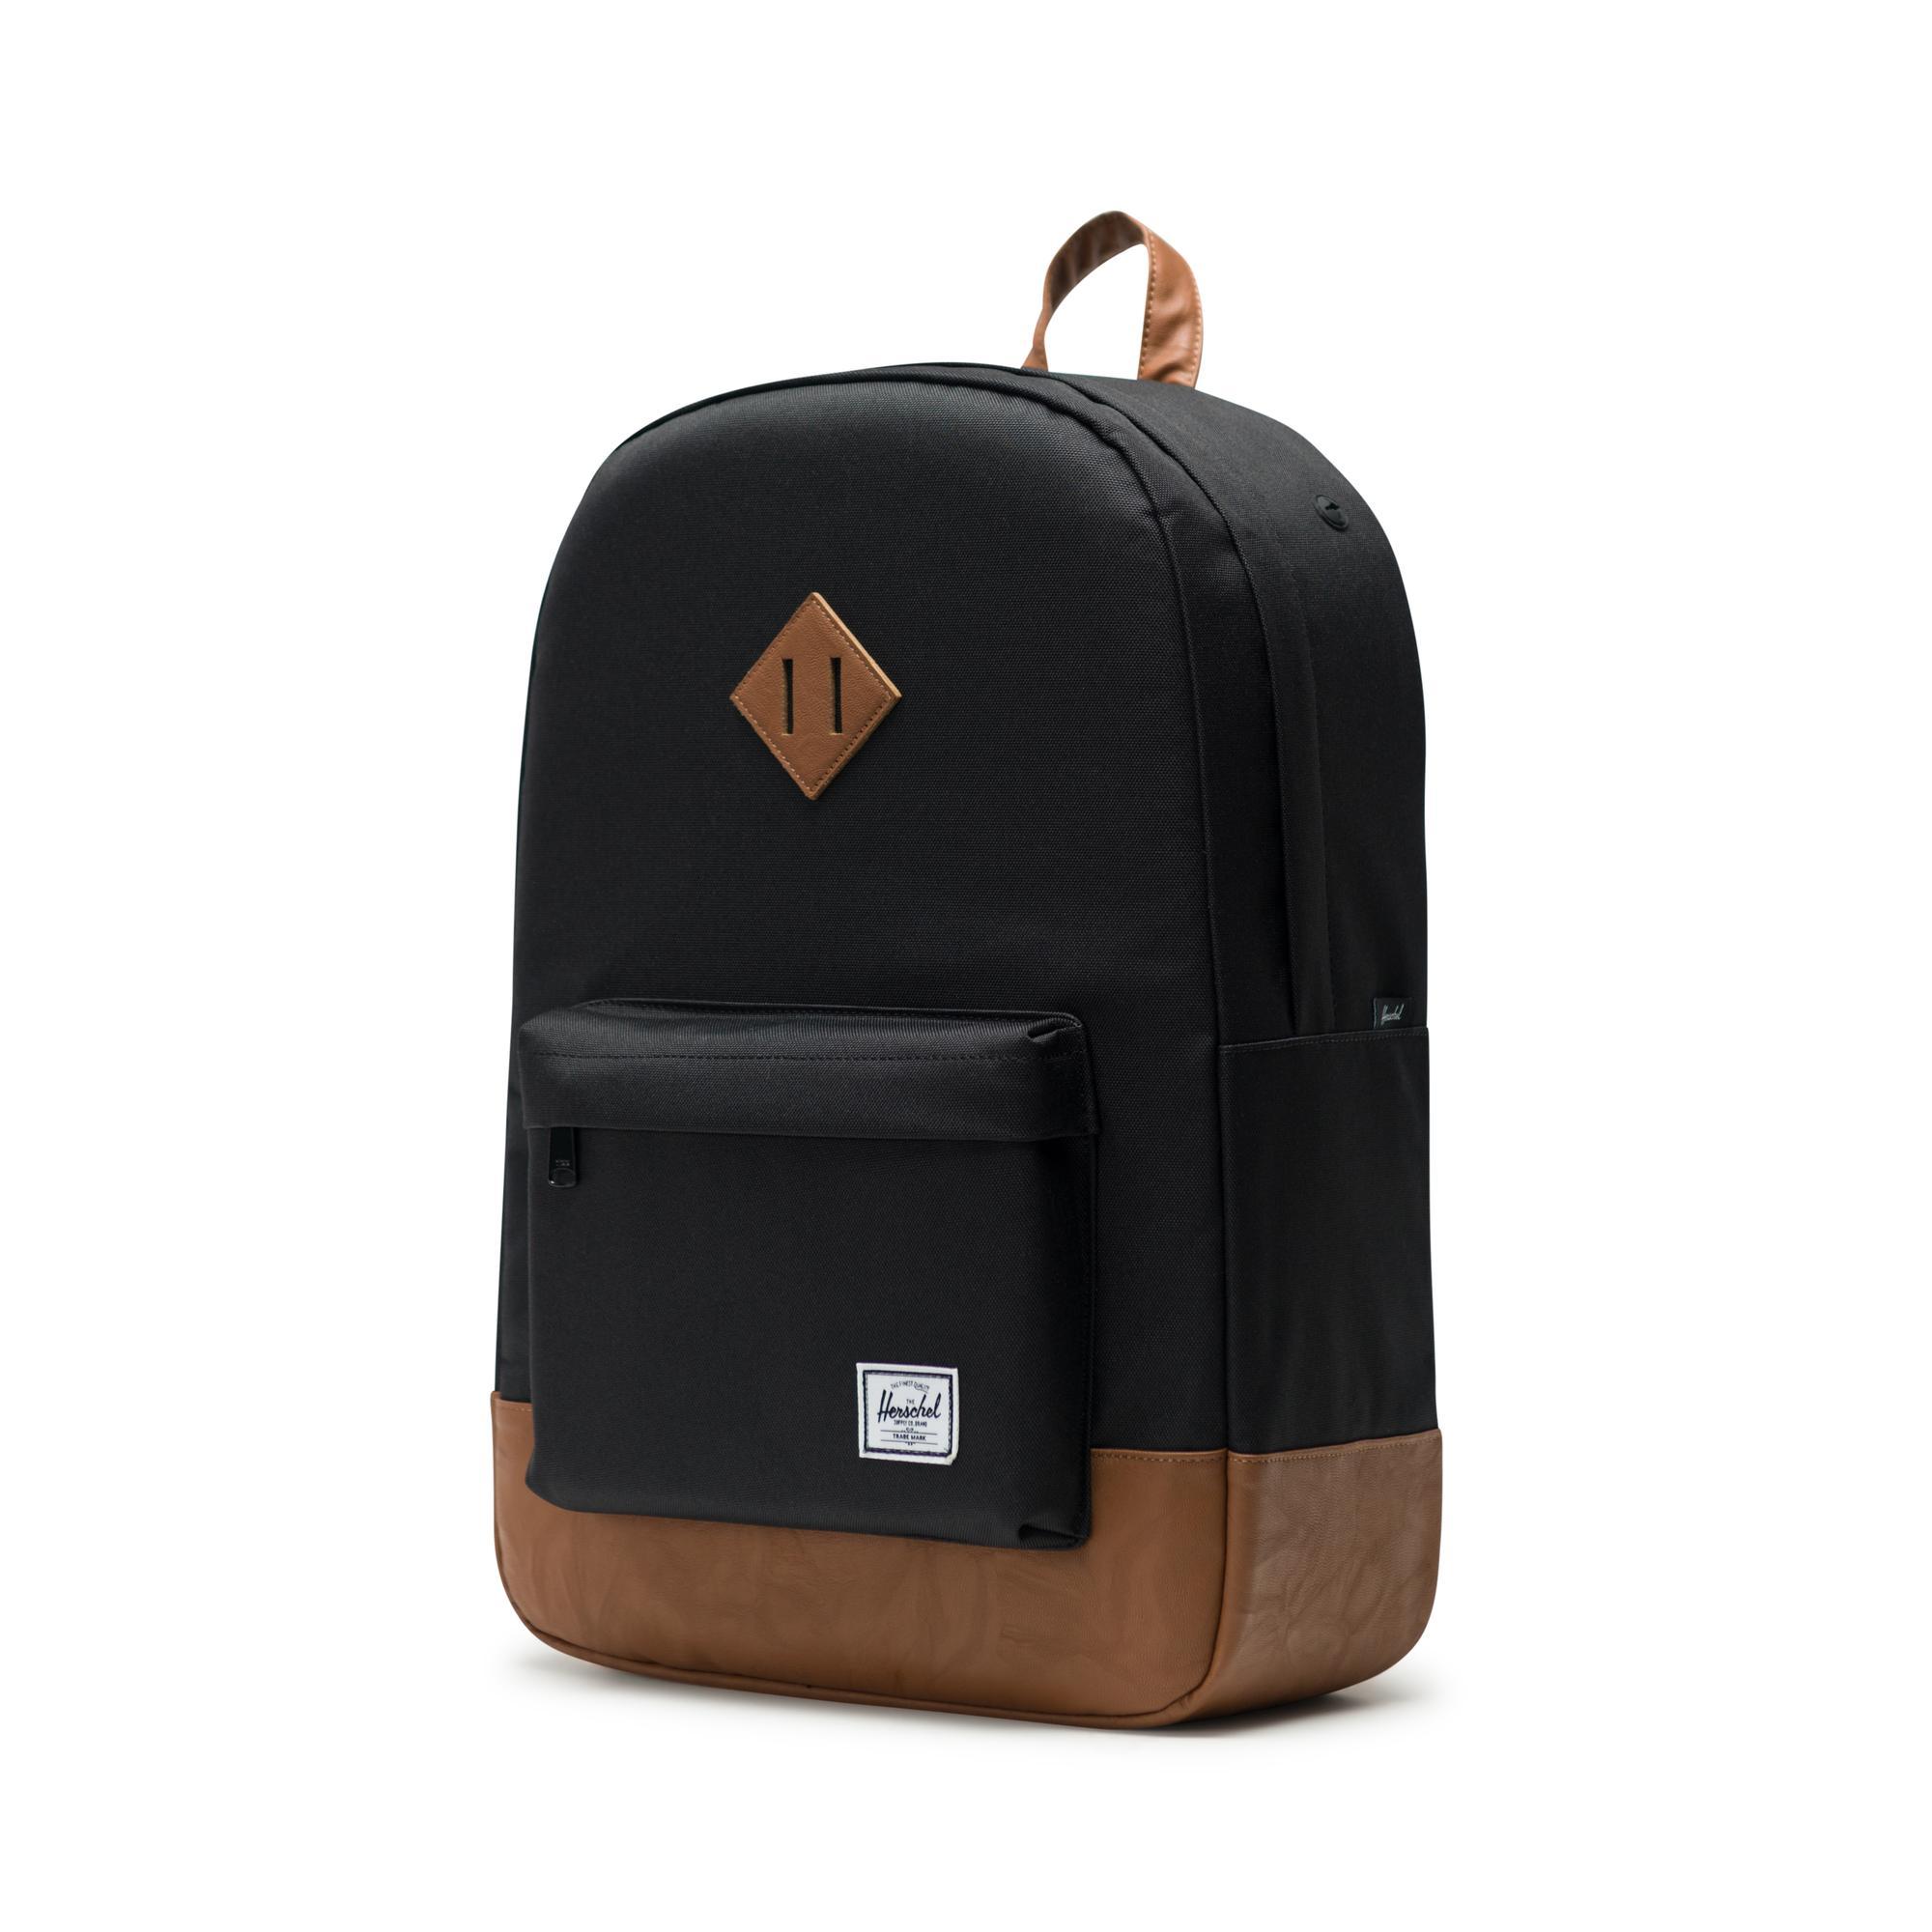 Herschel Supply Co. Leather Heritage Backpack in Black for Men - Lyst